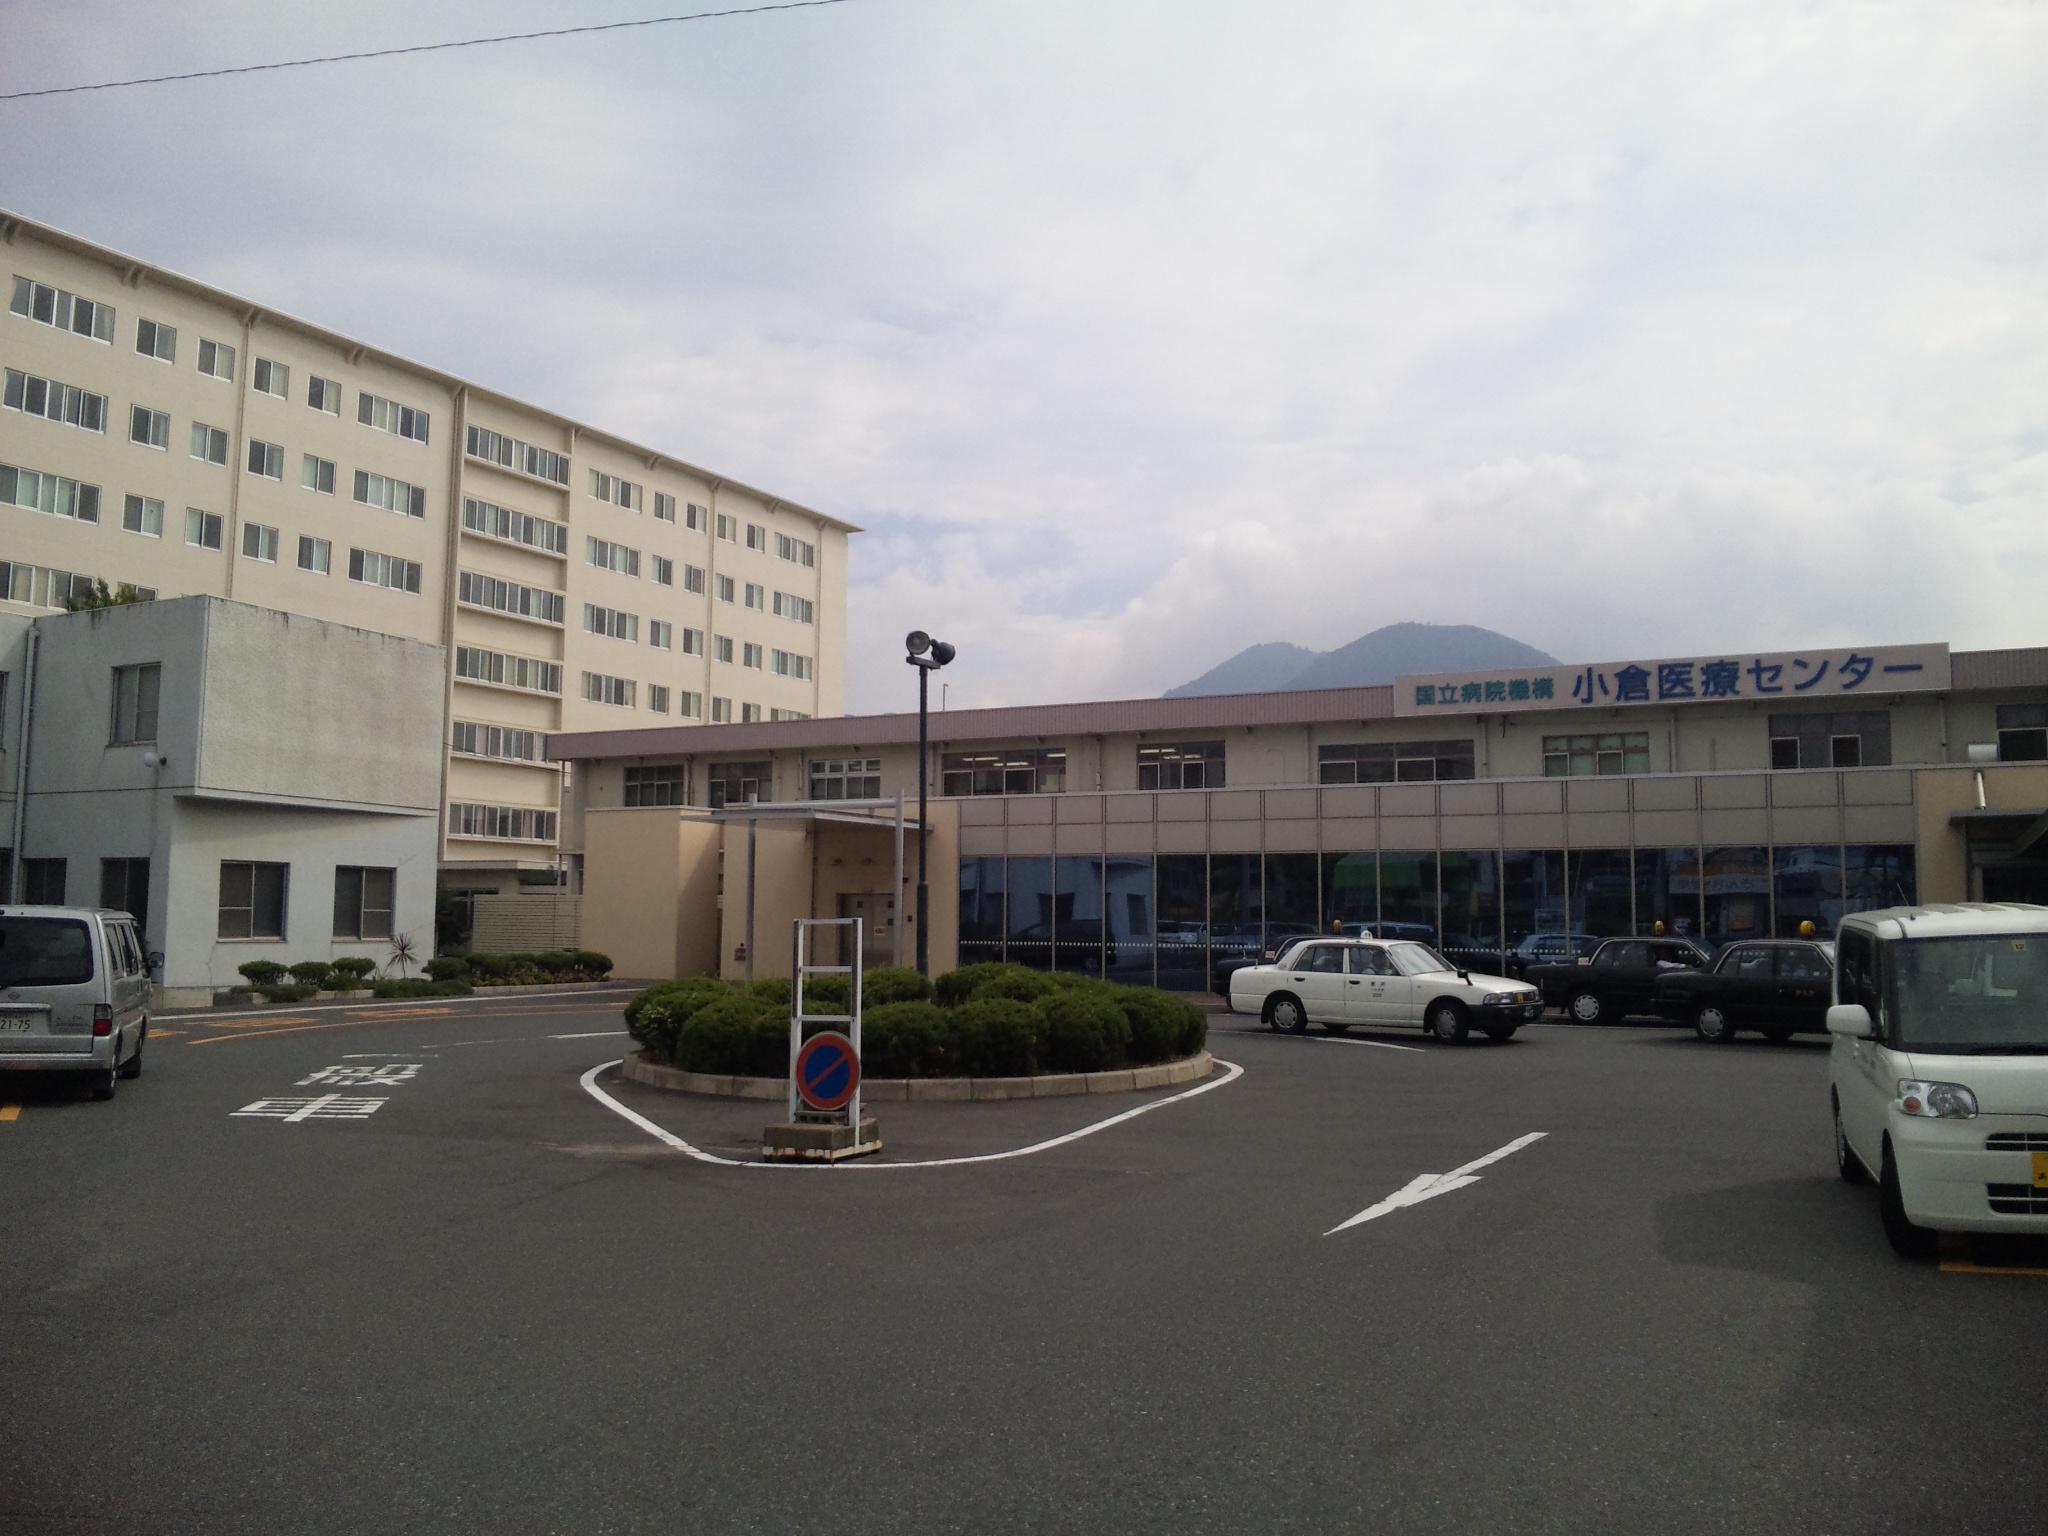 Hospital. 476m to the National Hospital Organization Ogura Medical Center (hospital)